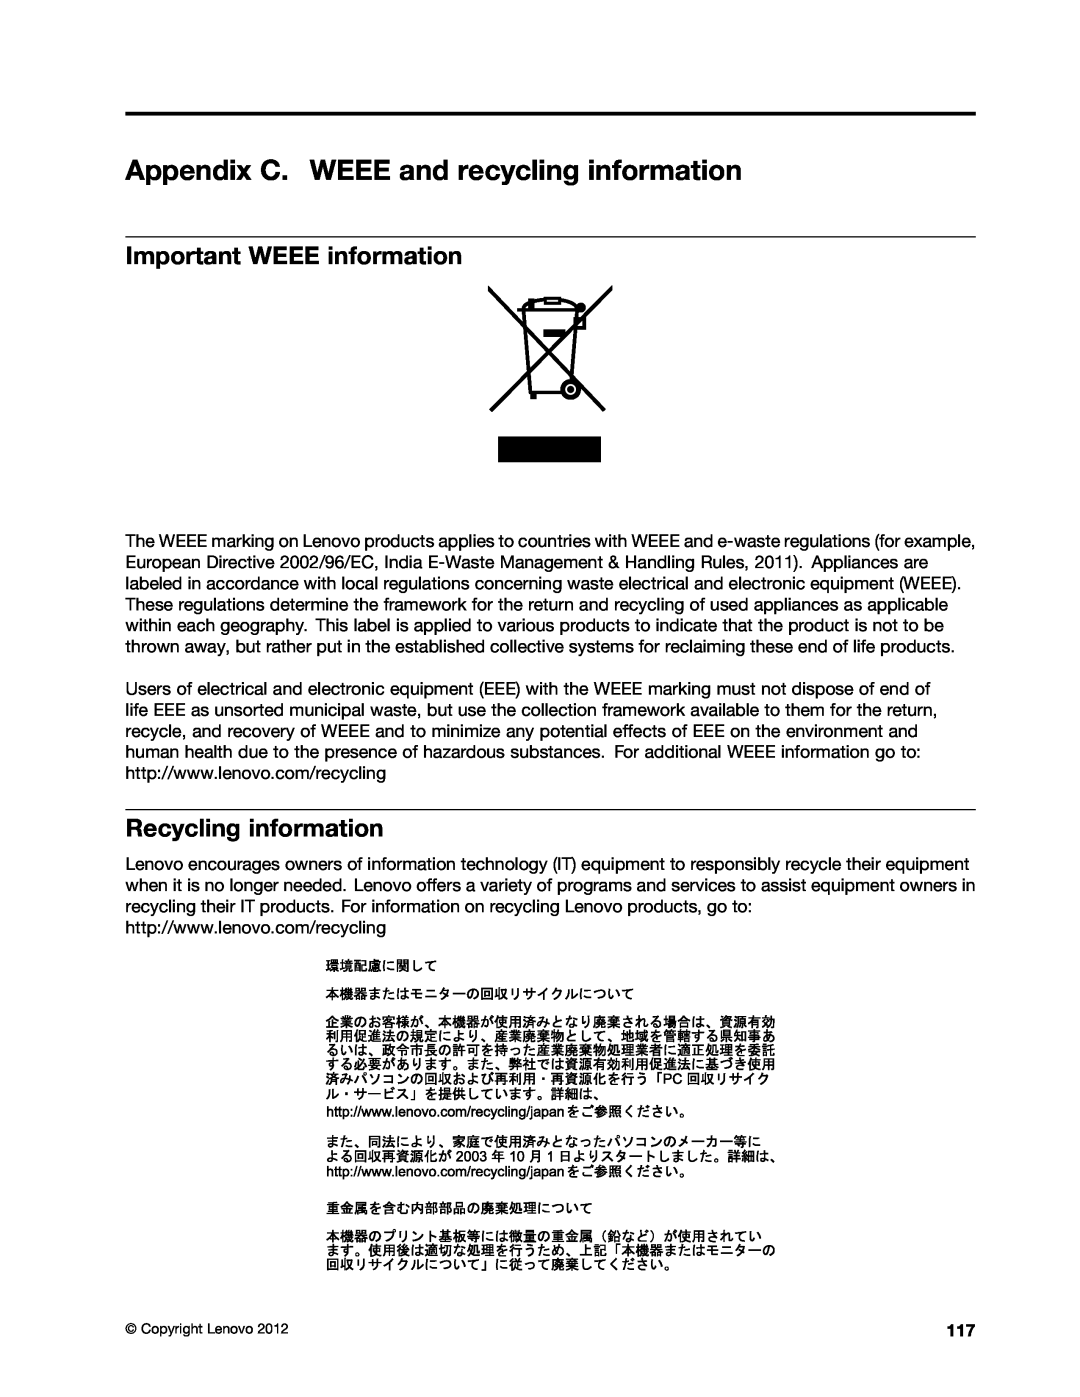 Lenovo 3484JMU manual Appendix C. WEEE and recycling information, Important WEEE information, Recycling information 